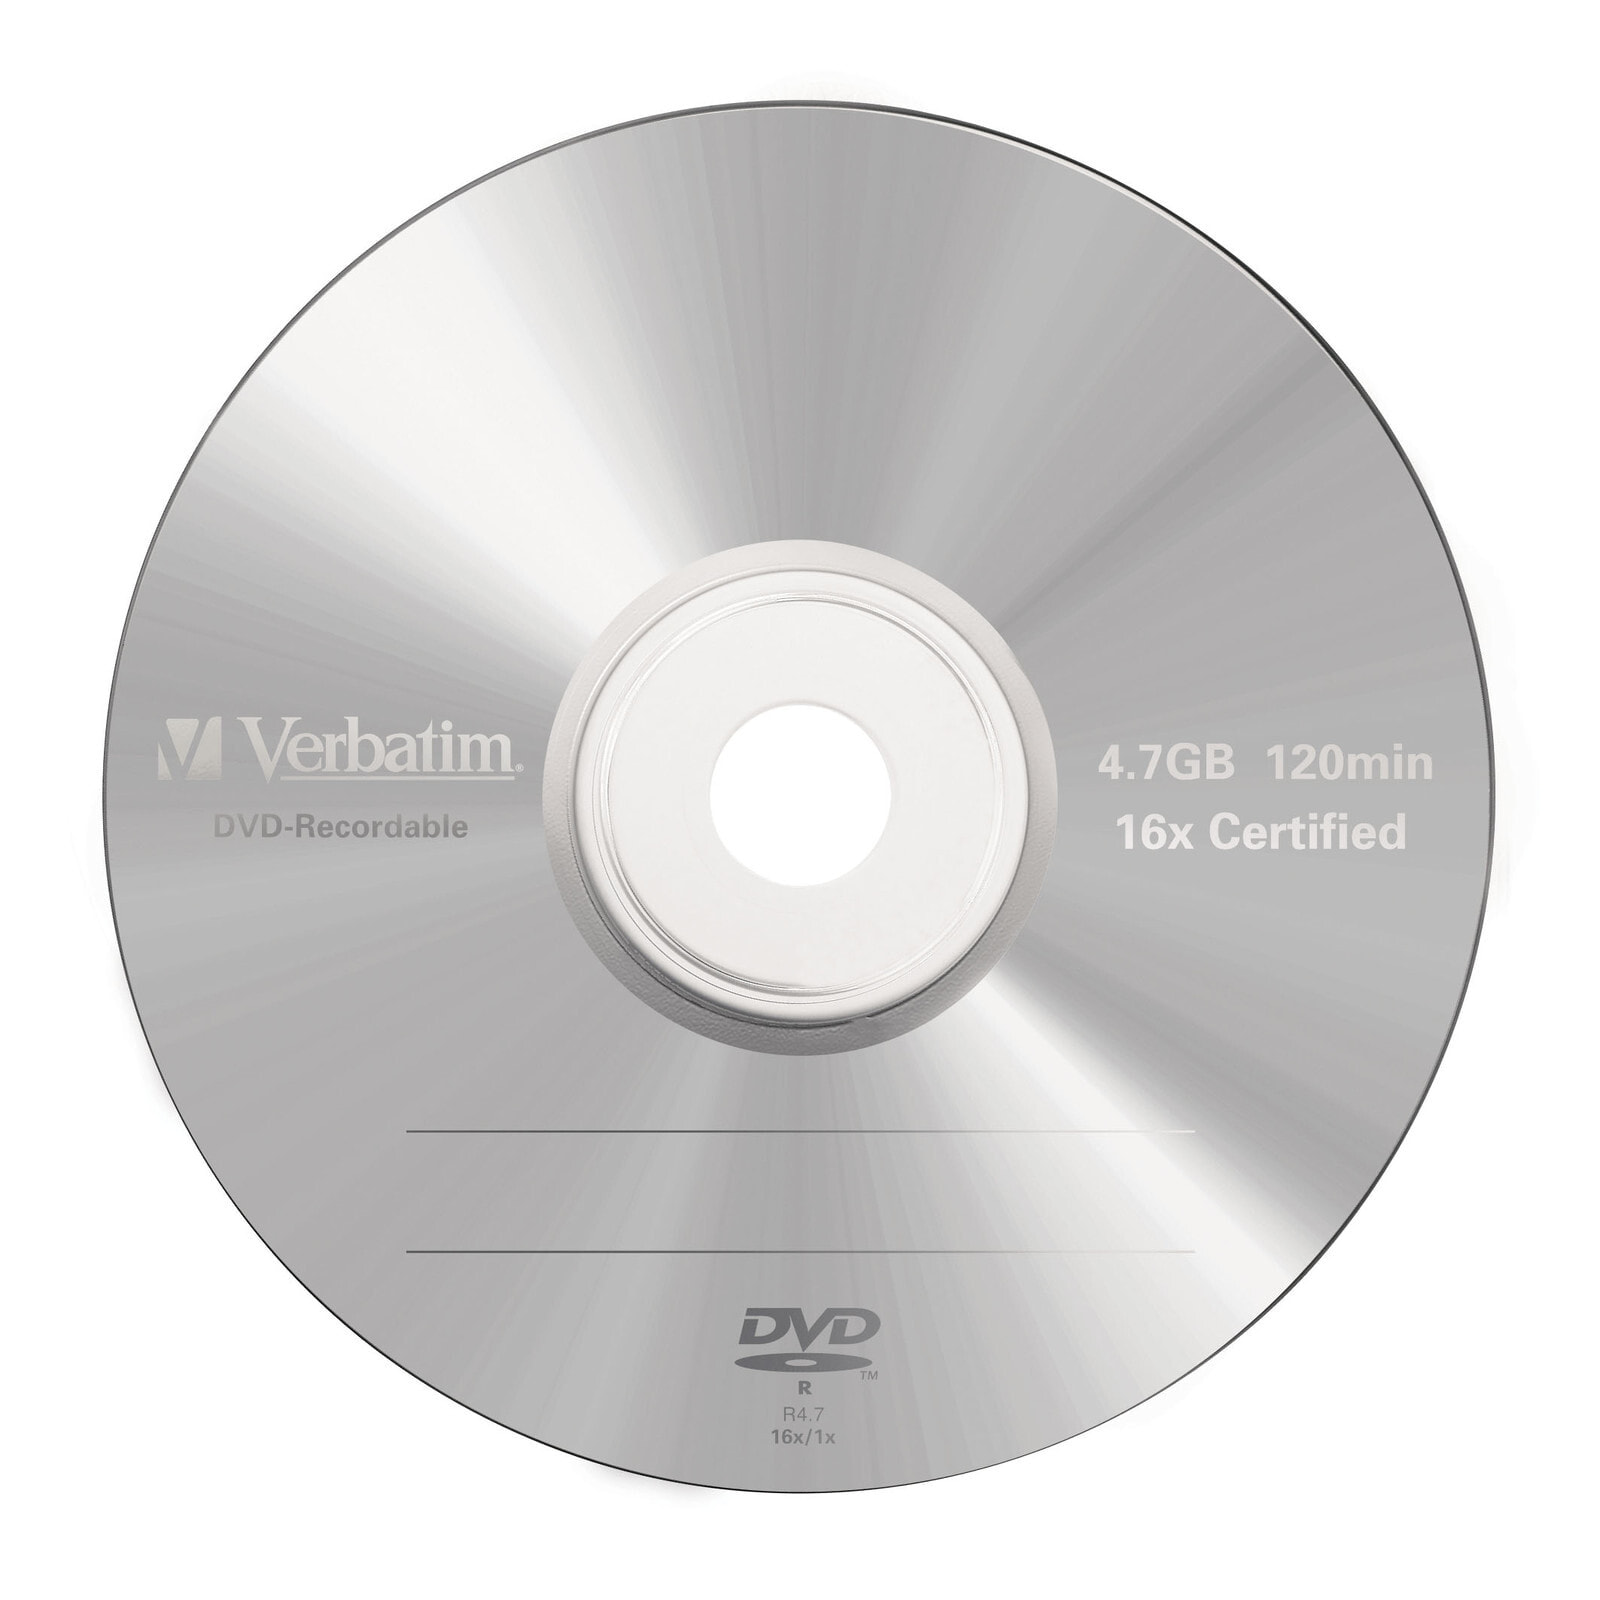 HP Blank DVD RW 4.7GB Jewel Case DVD-RW, Dimension/Size: 120mm at